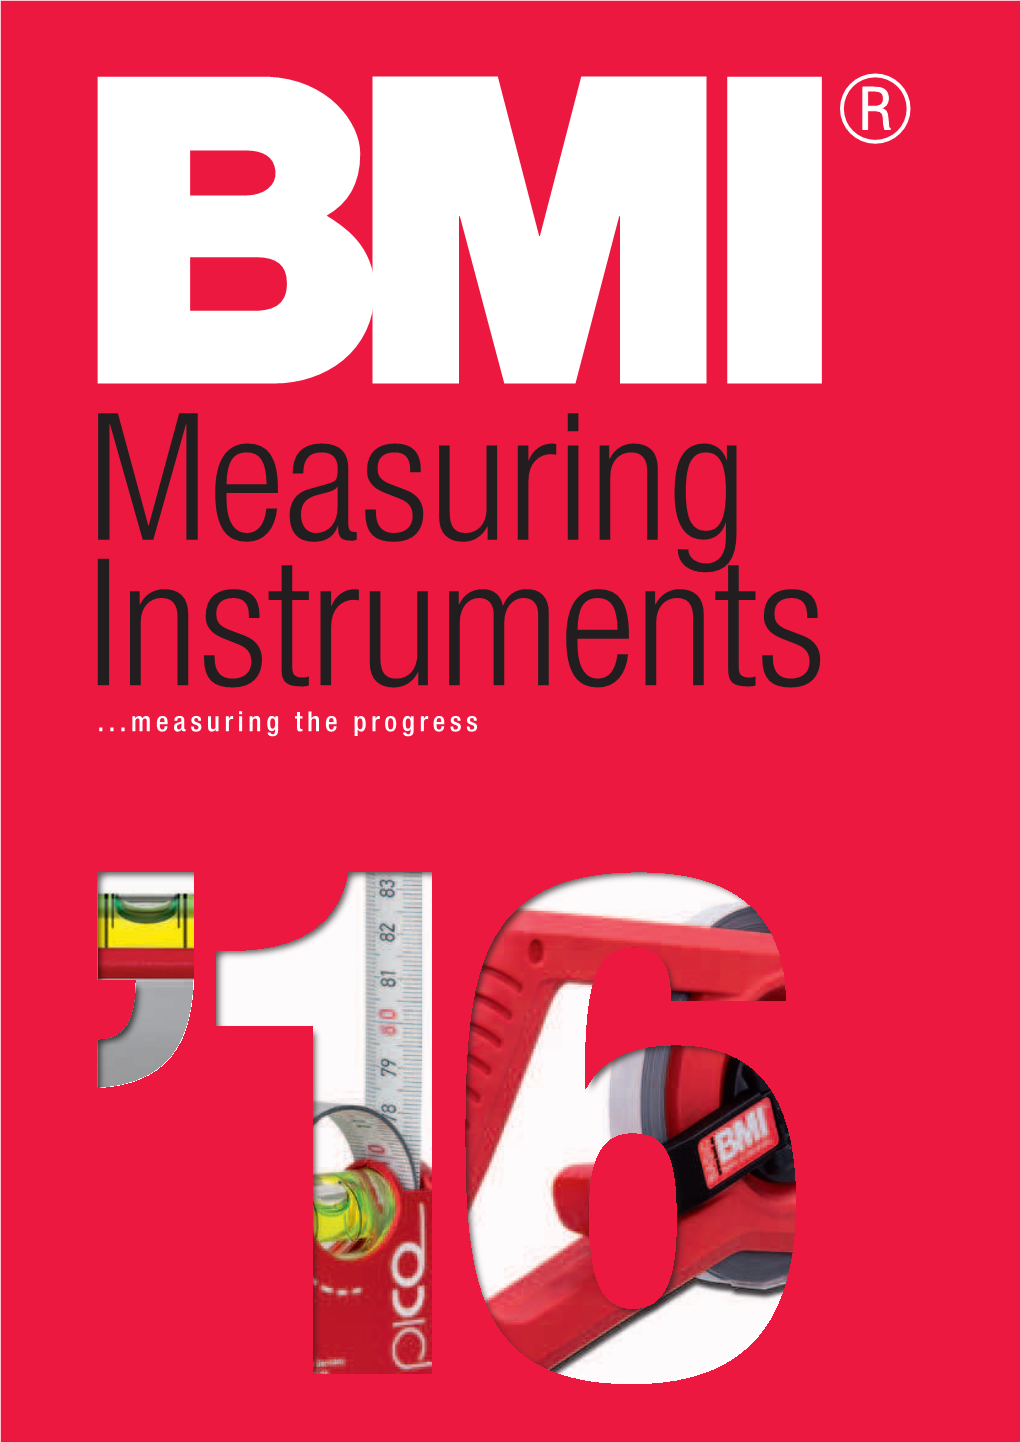 Bmi Catalogue Measuring Instruments Spirit Levels Pocket Tapes Laser Rules